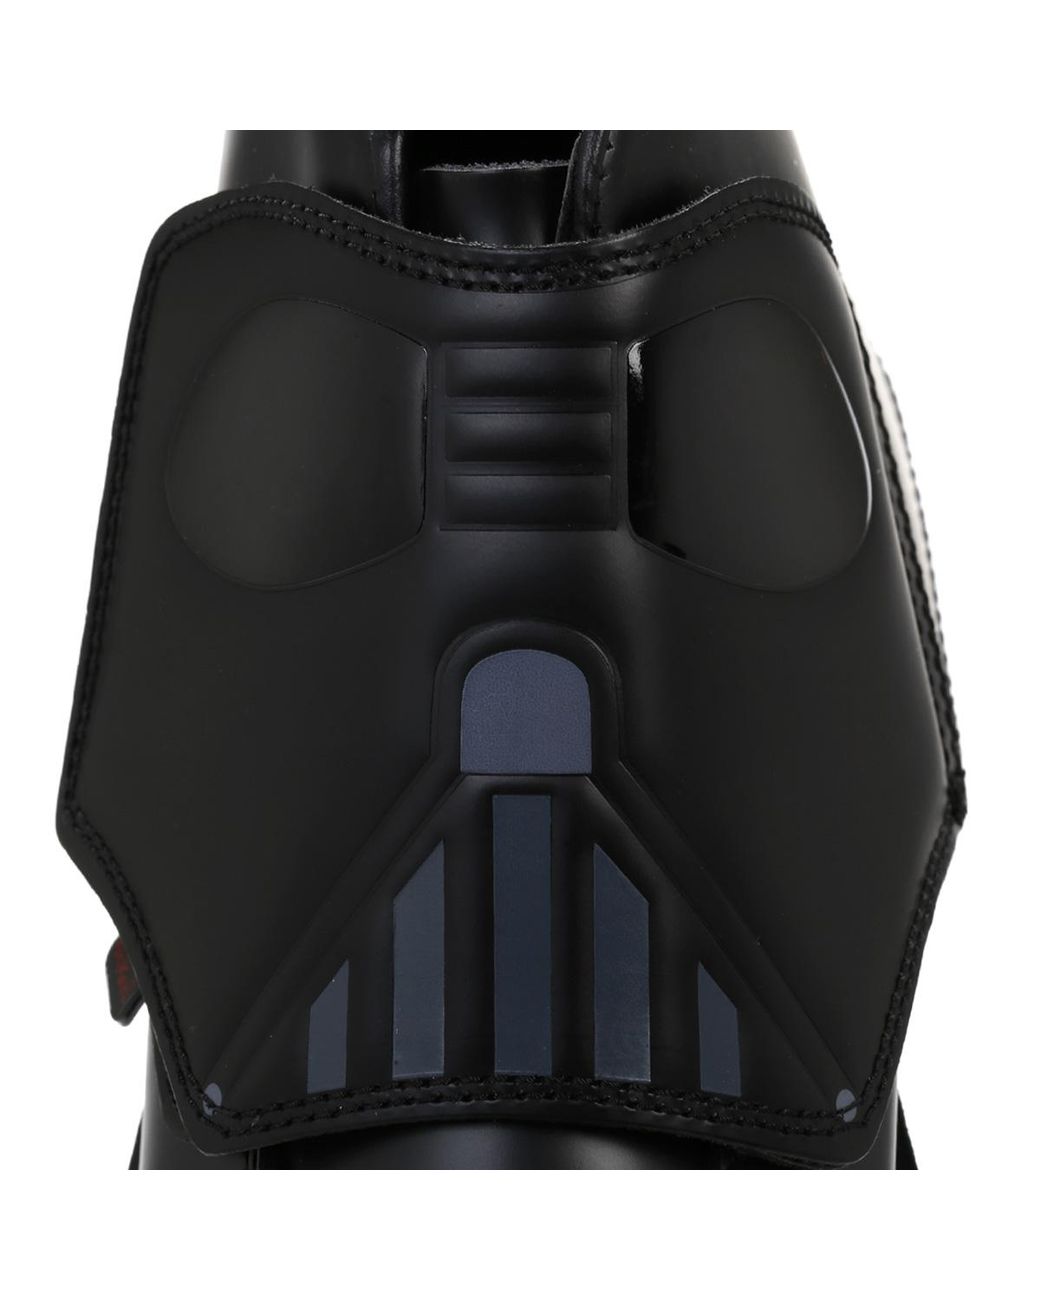 Kickers Kickers Starwars Vader Lightsaber black boots size J9 